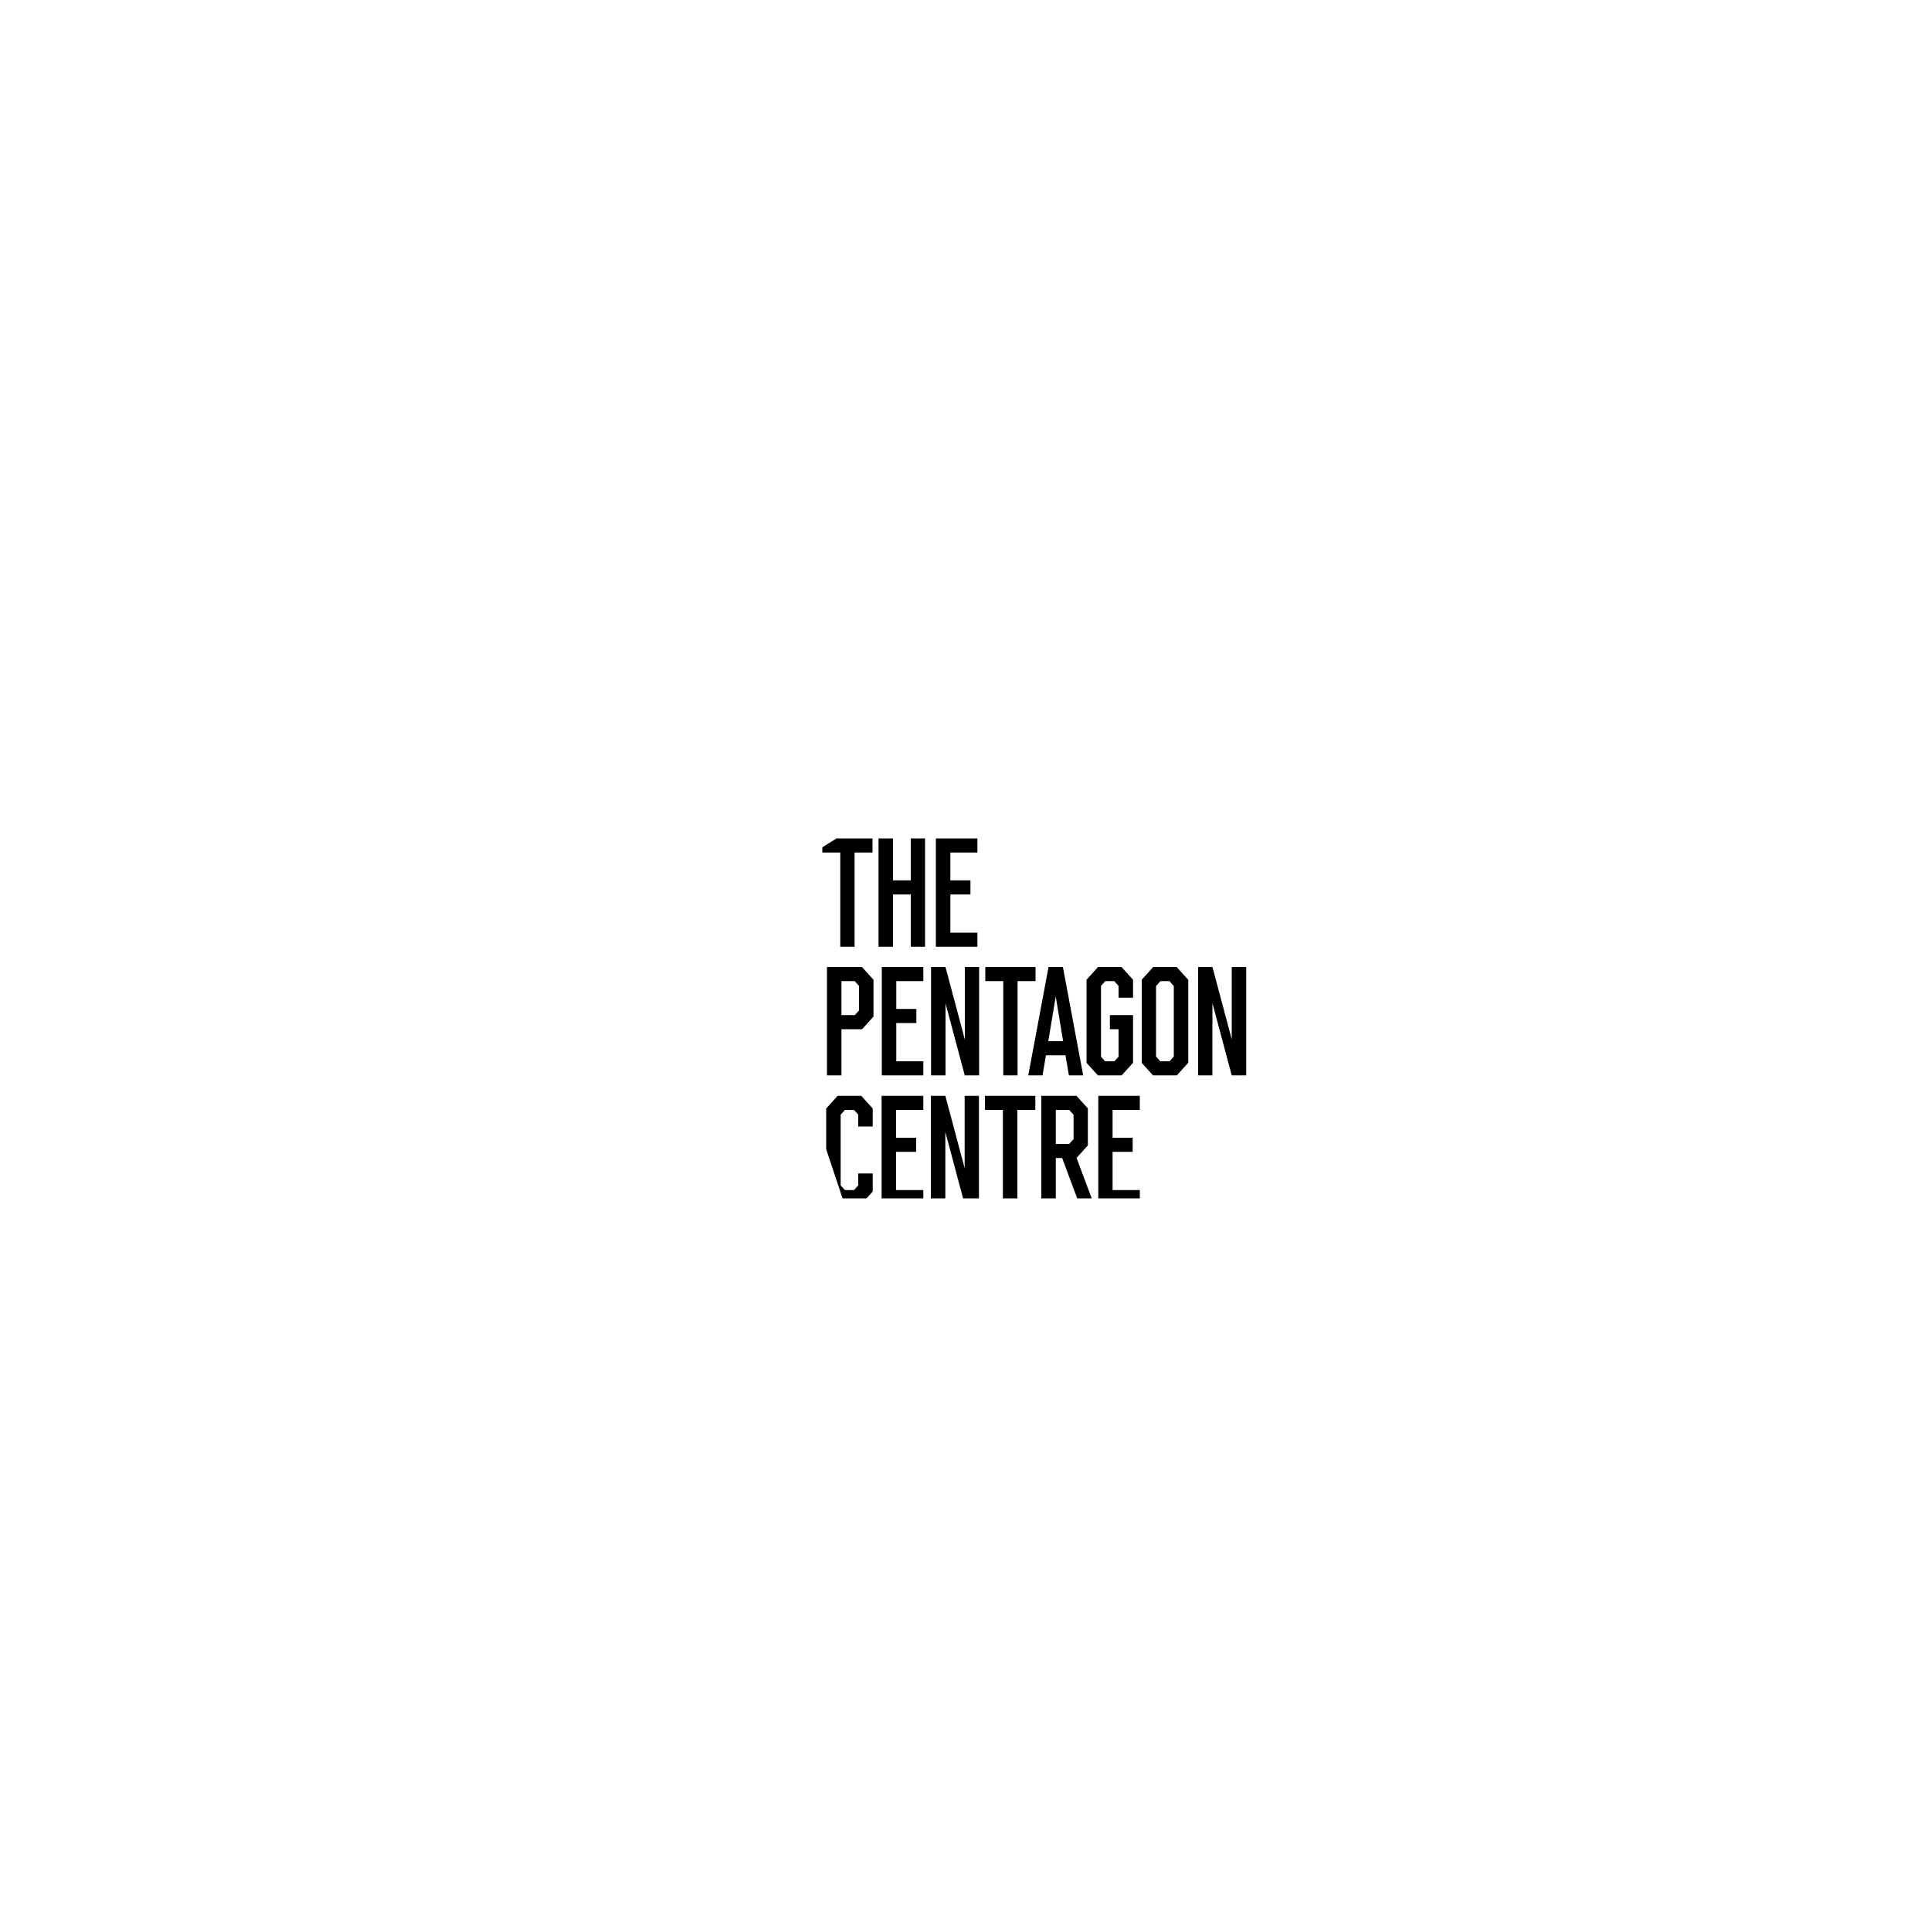 The Pentagon Centre Logo Black On White